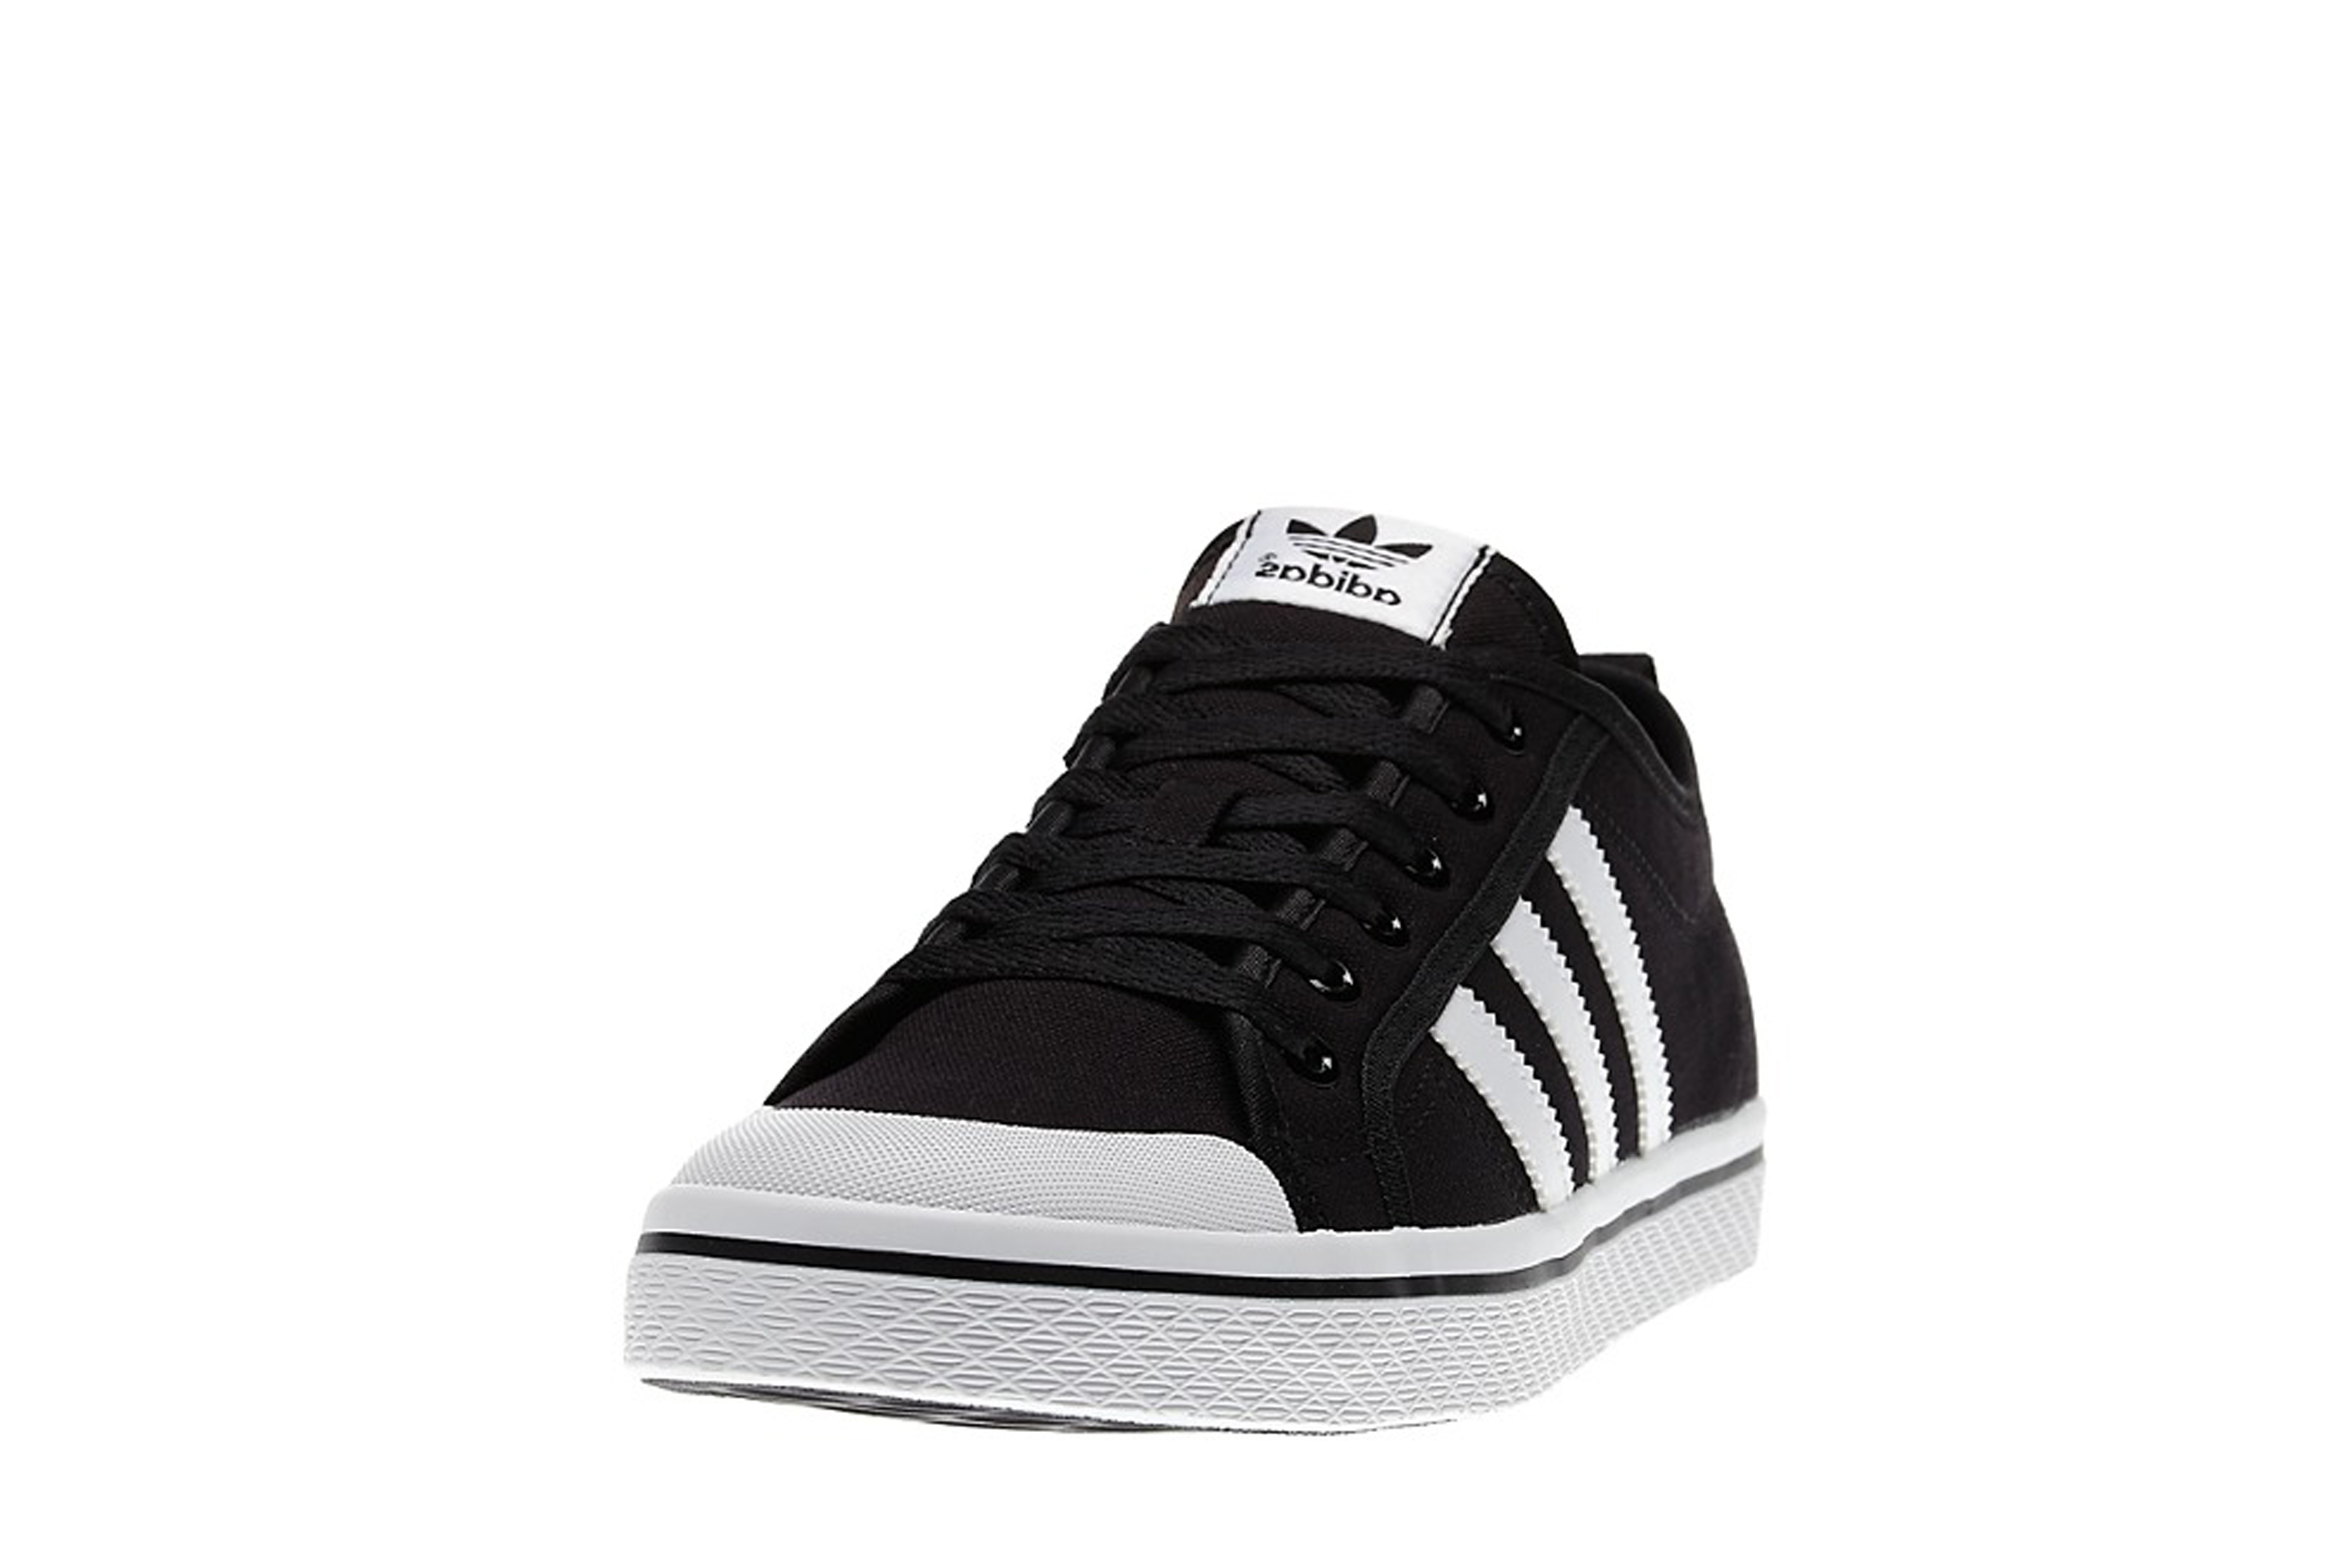 adidas originals Stripes Low Sneakers Black/White/Black